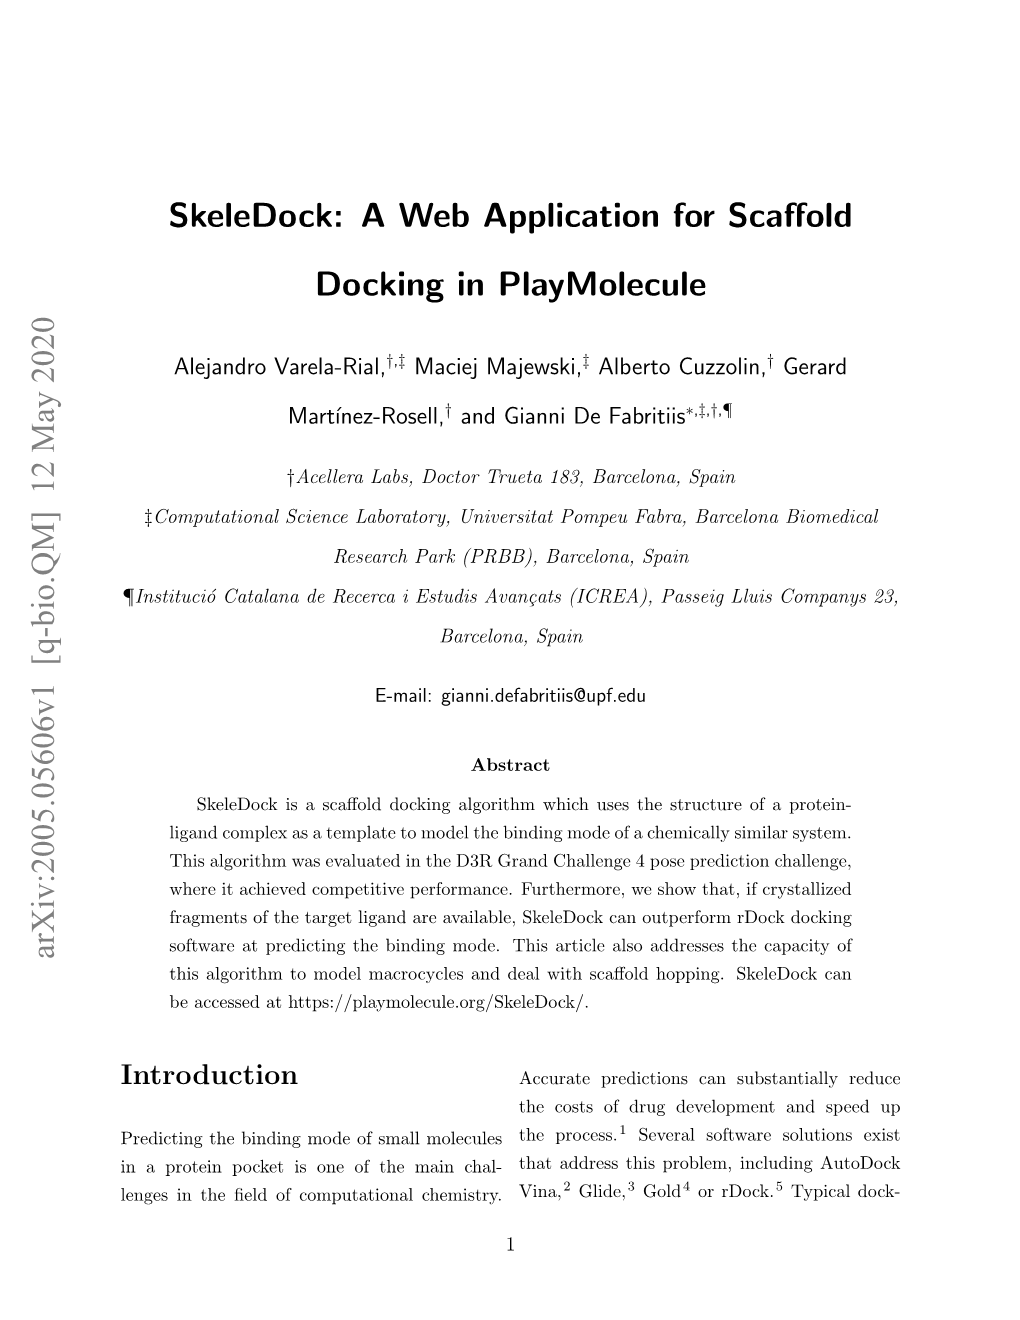 Skeledock: a Web Application for Scaffold Docking in Playmolecule